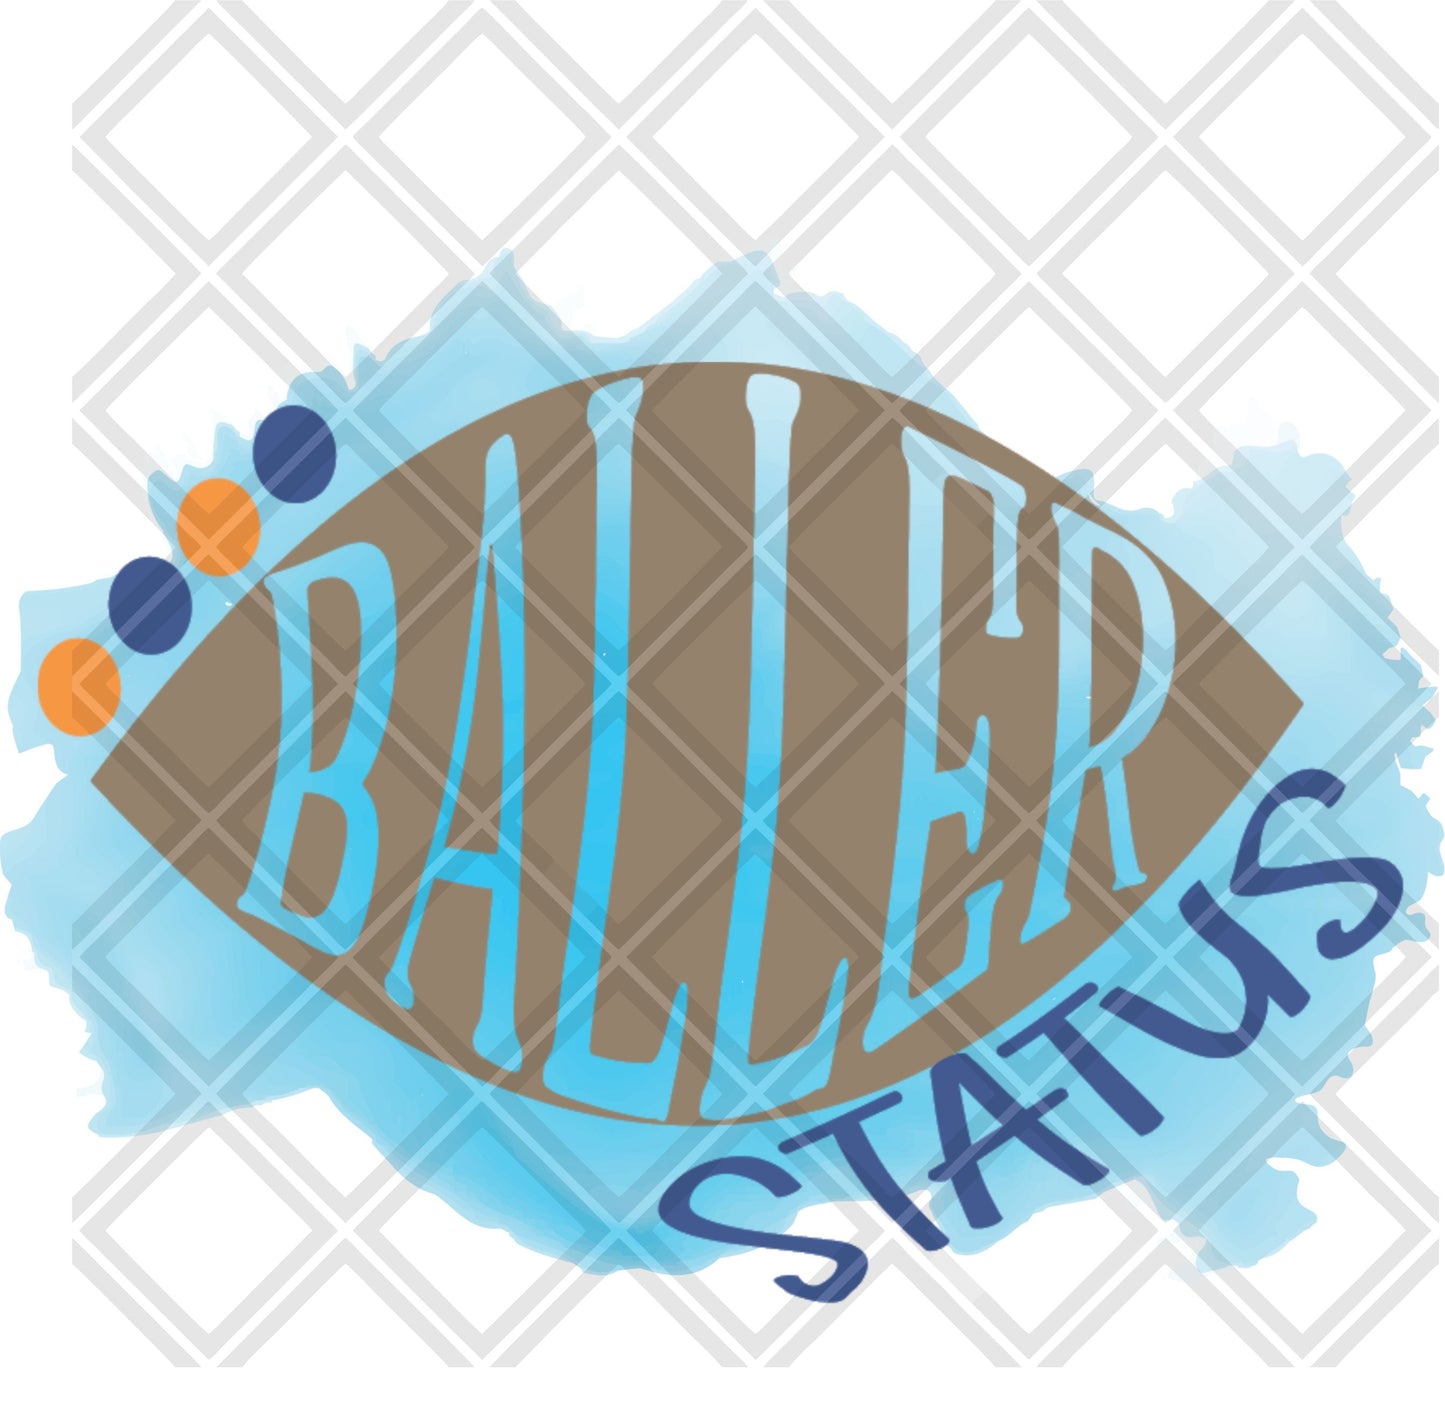 Baller Status Football DTF TRANSFERSPRINT TO ORDER